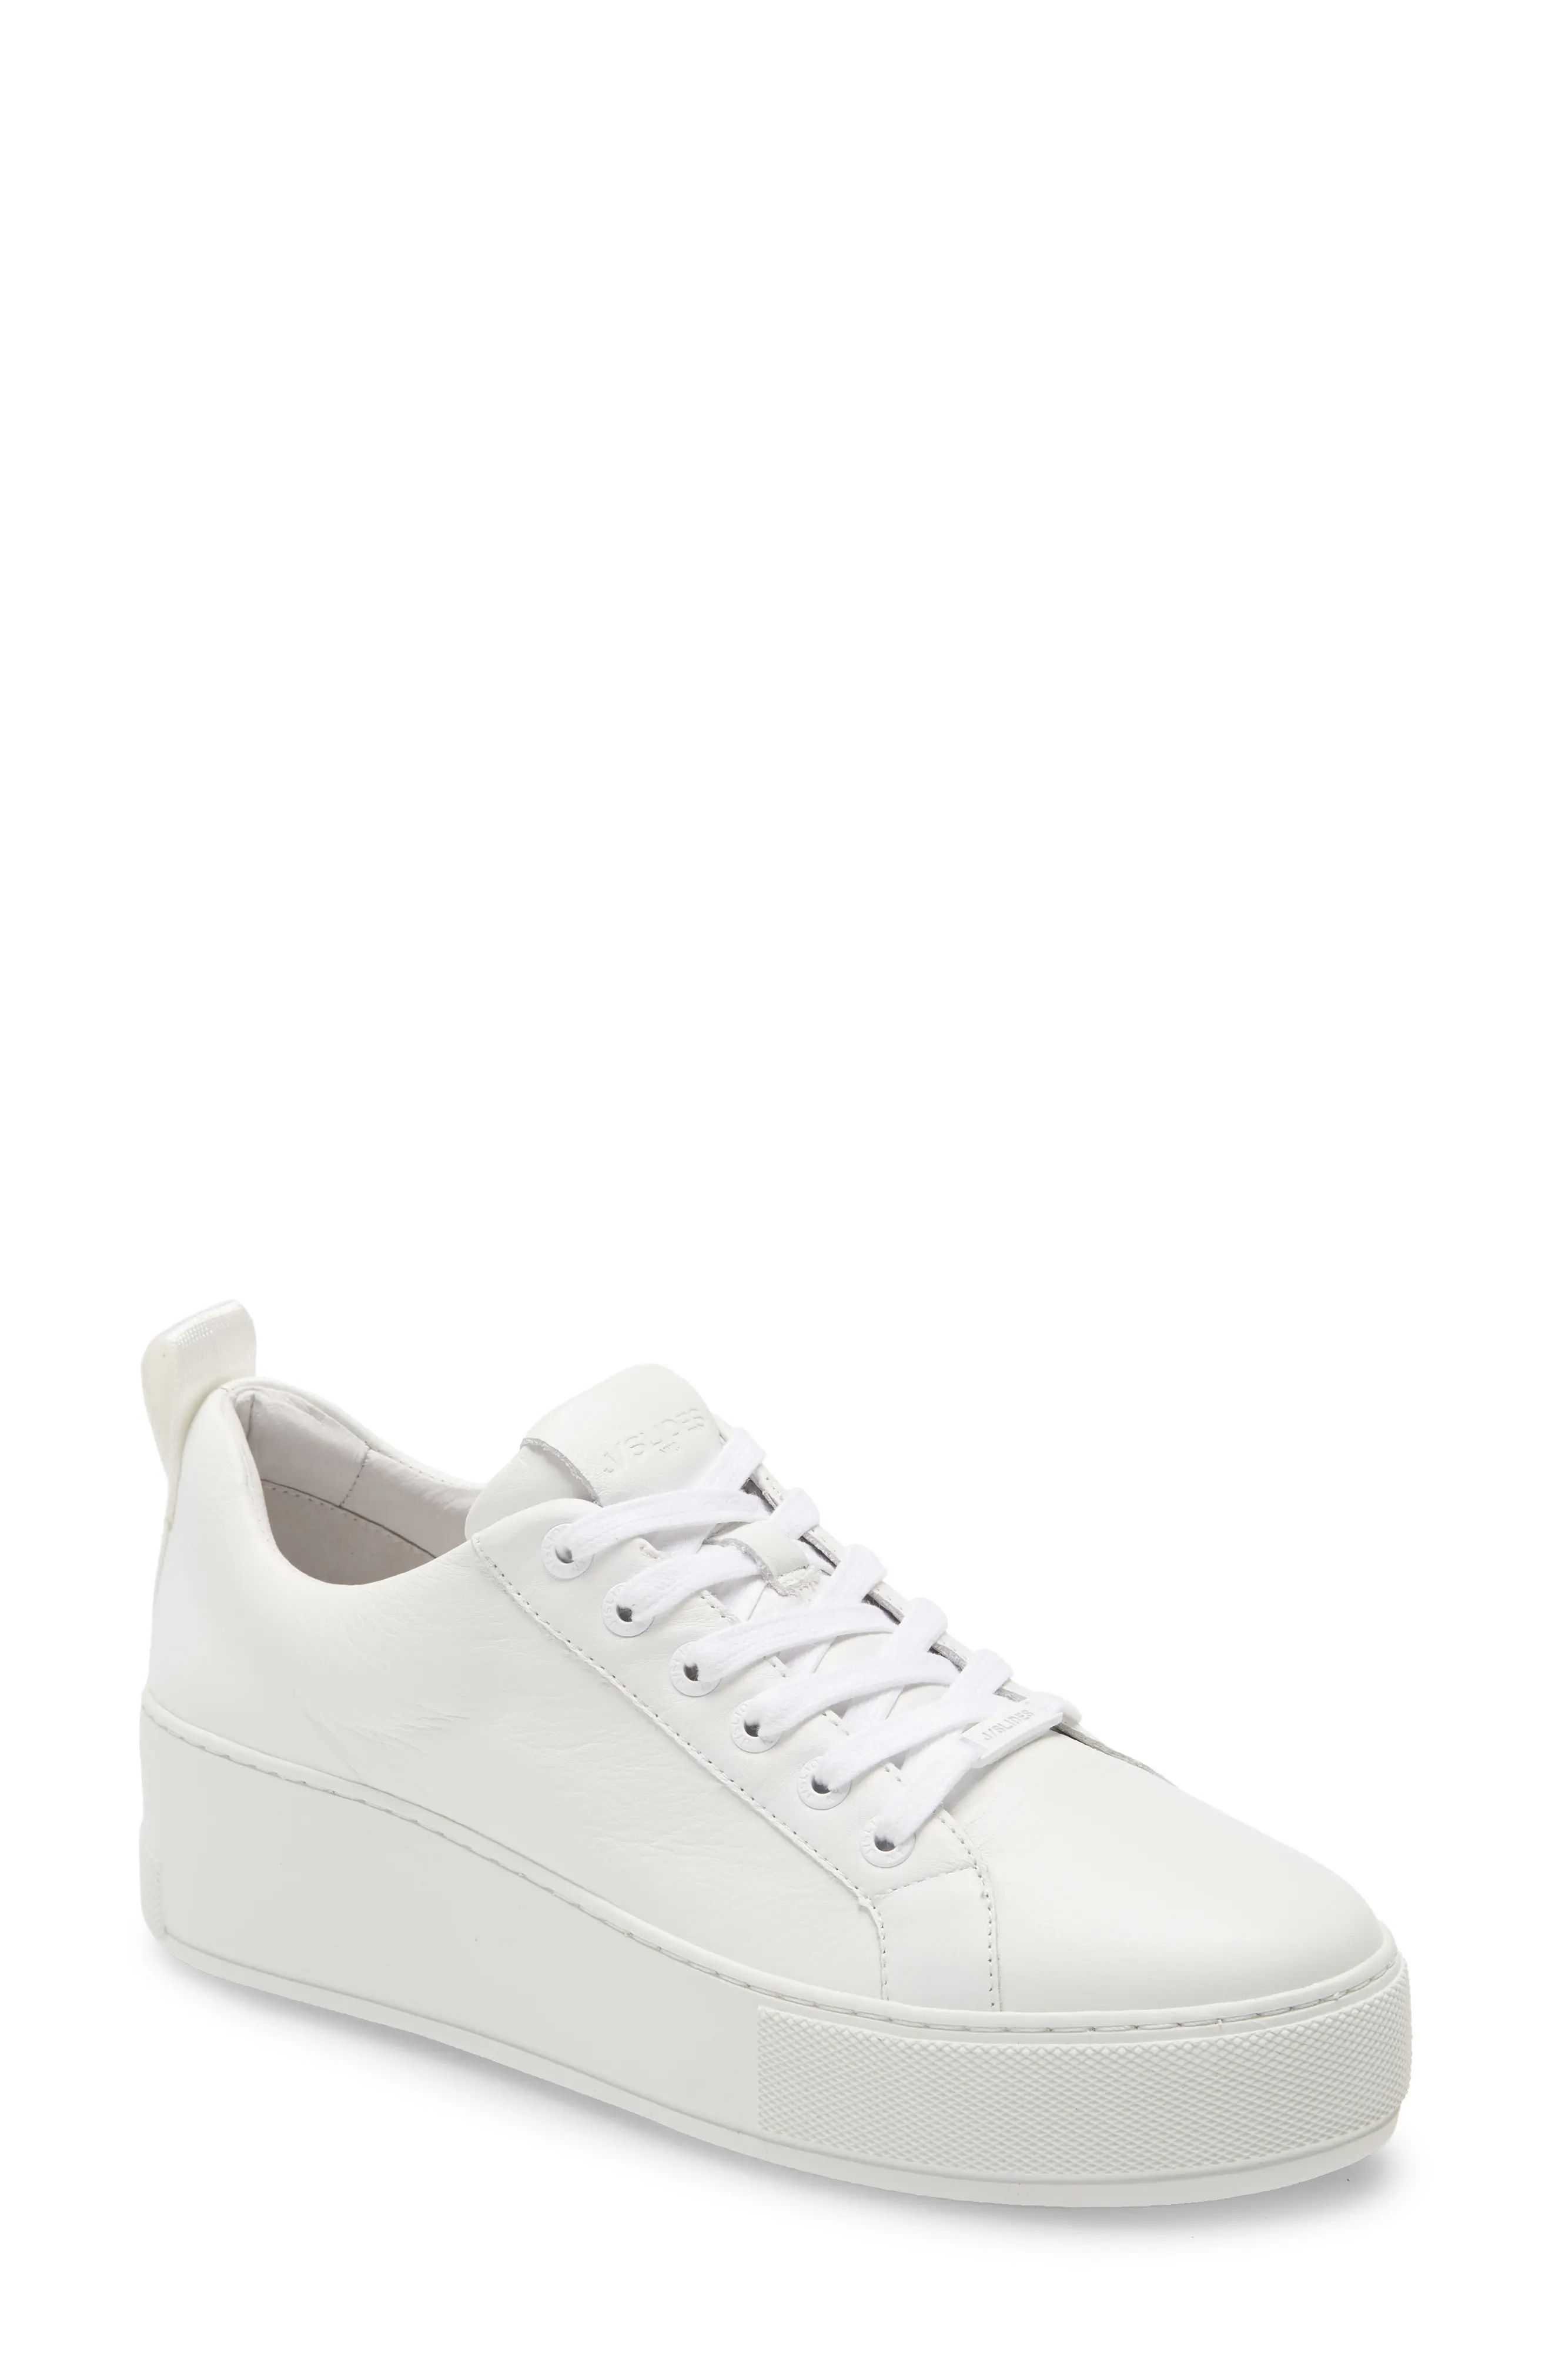 Women's Jslides Margot Platform Sneaker, Size 6 M - White | Nordstrom